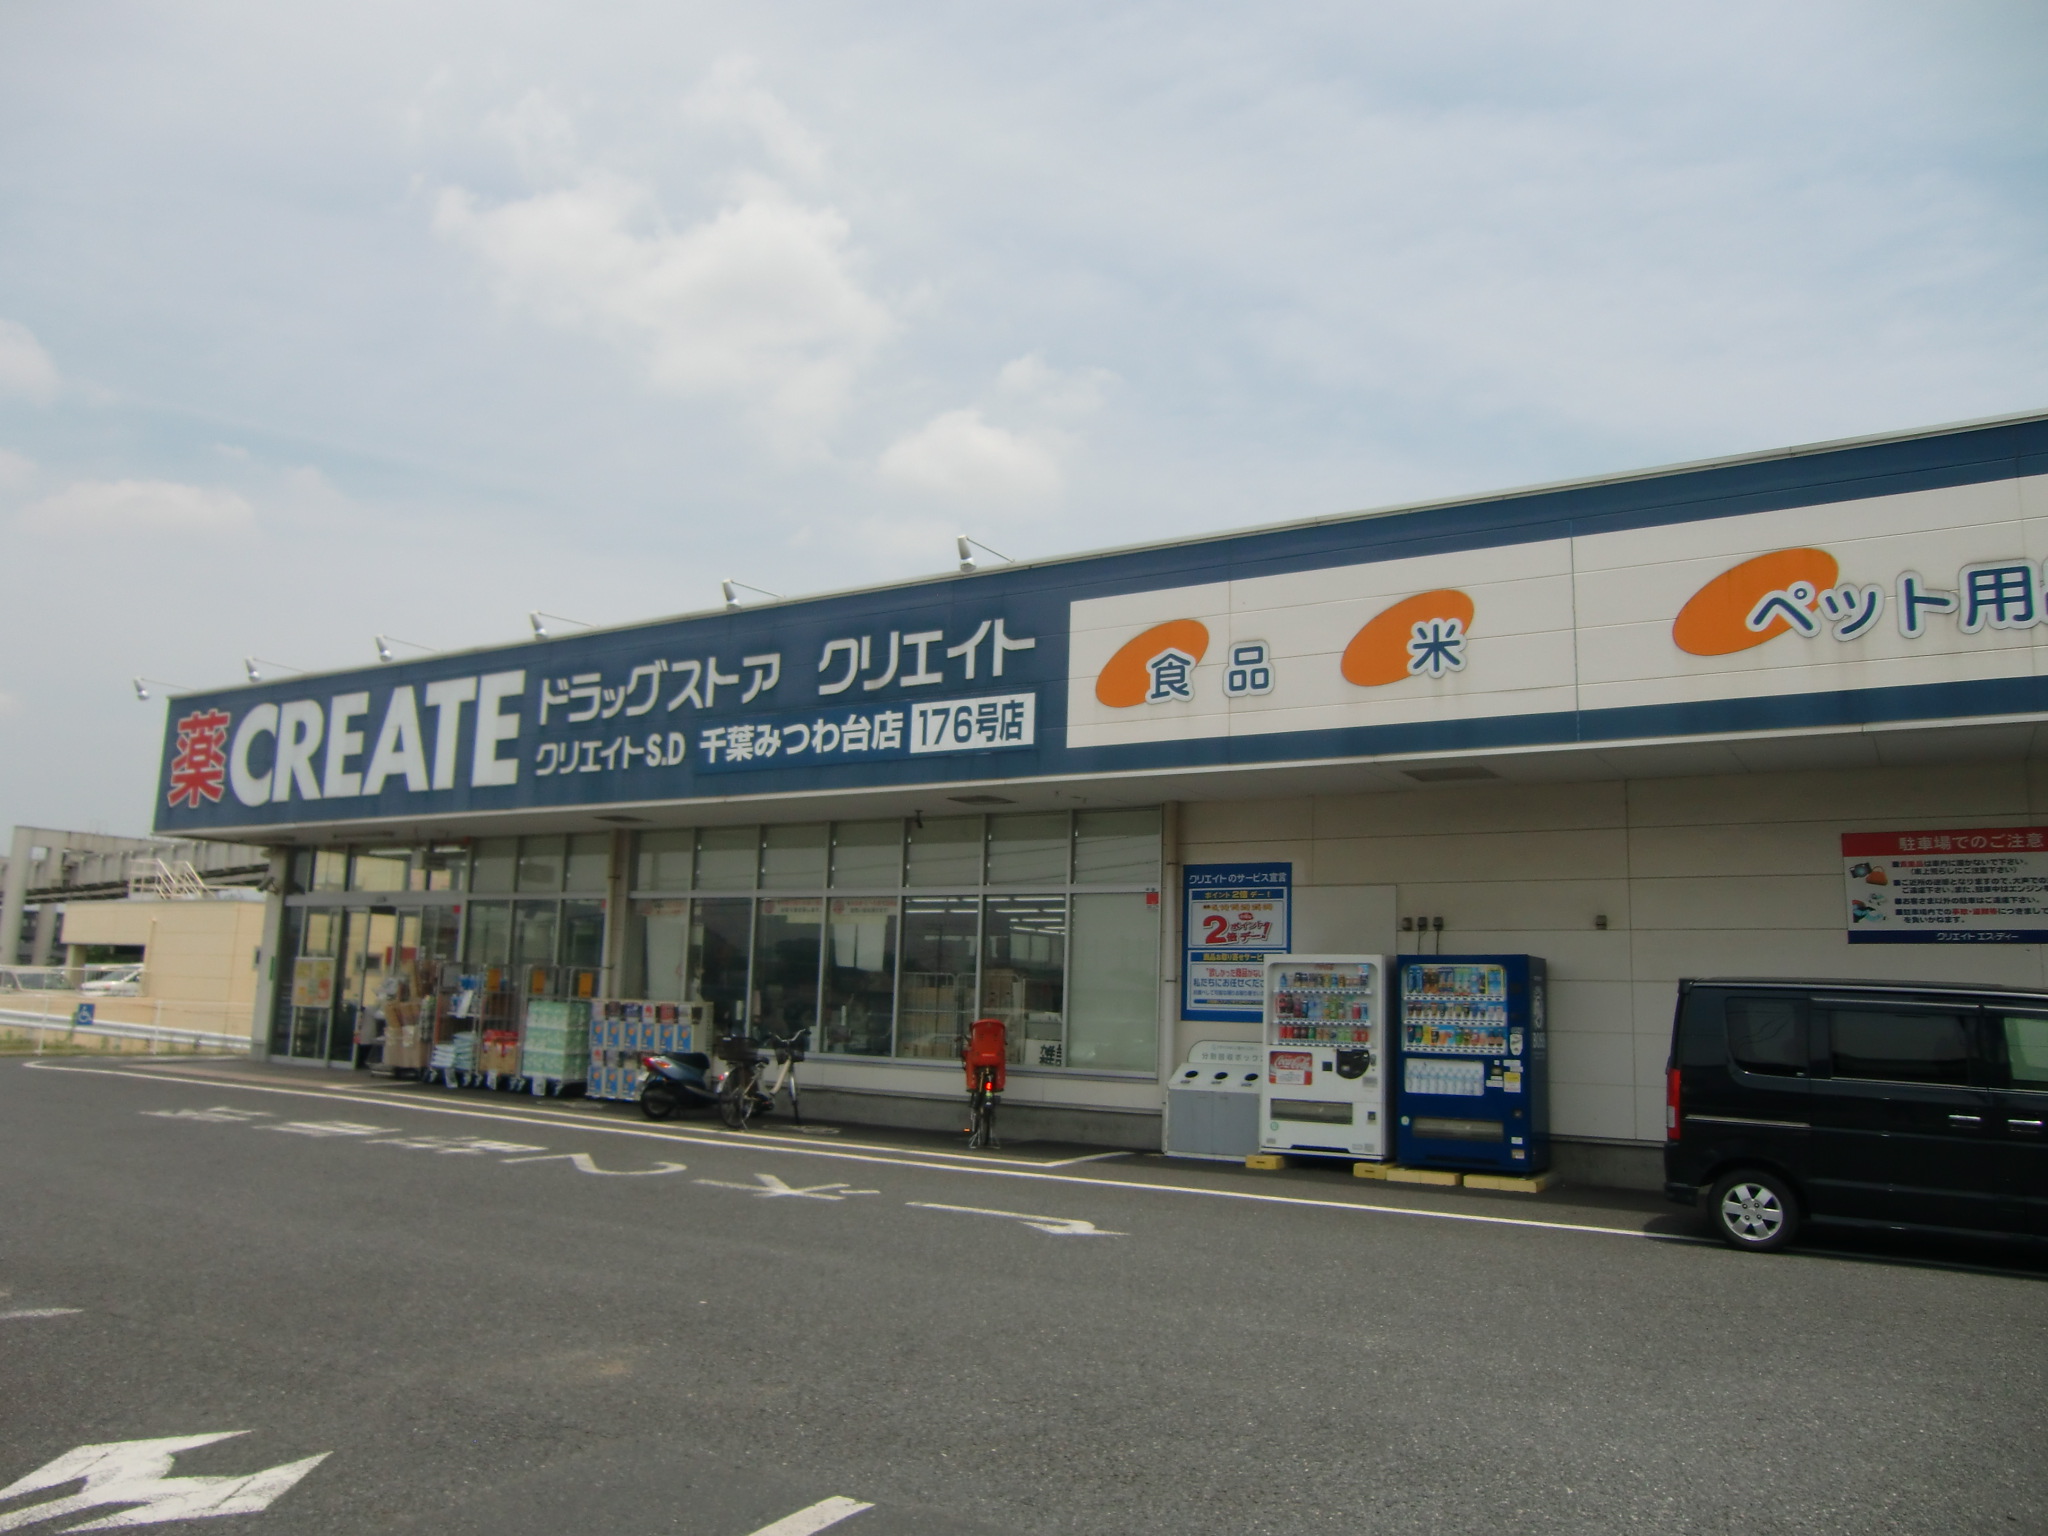 Dorakkusutoa. Create es ・ Dee Chiba Mitsuwadai shop 490m until (drugstore)